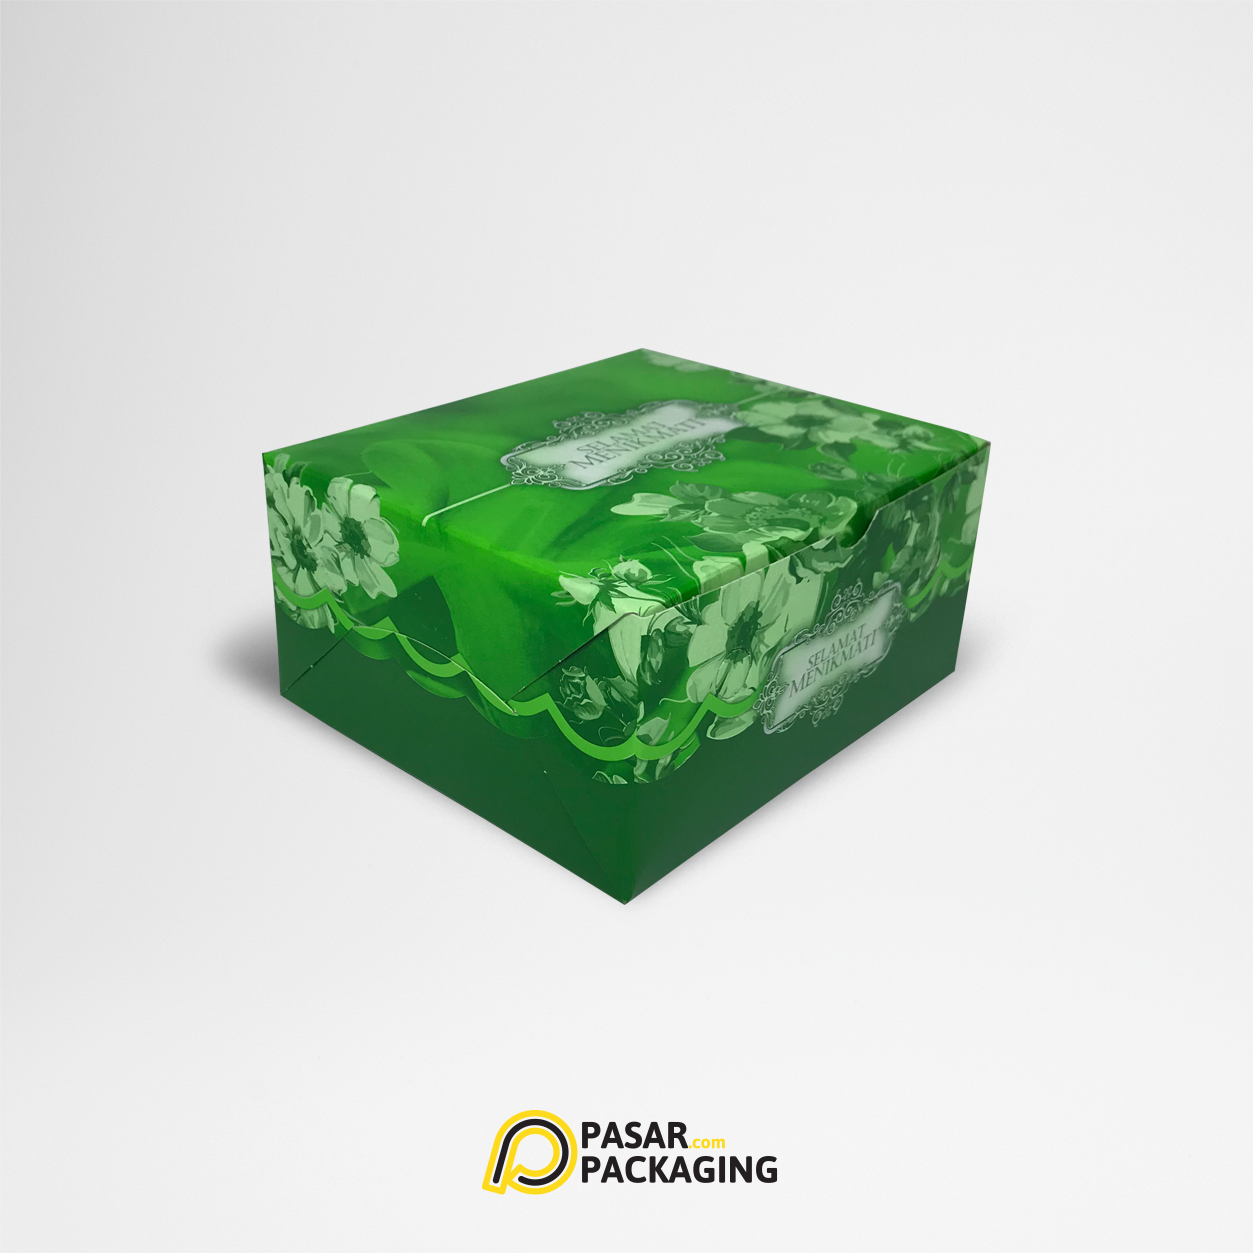 14x12 Green Snack Box - Pasar Packaging